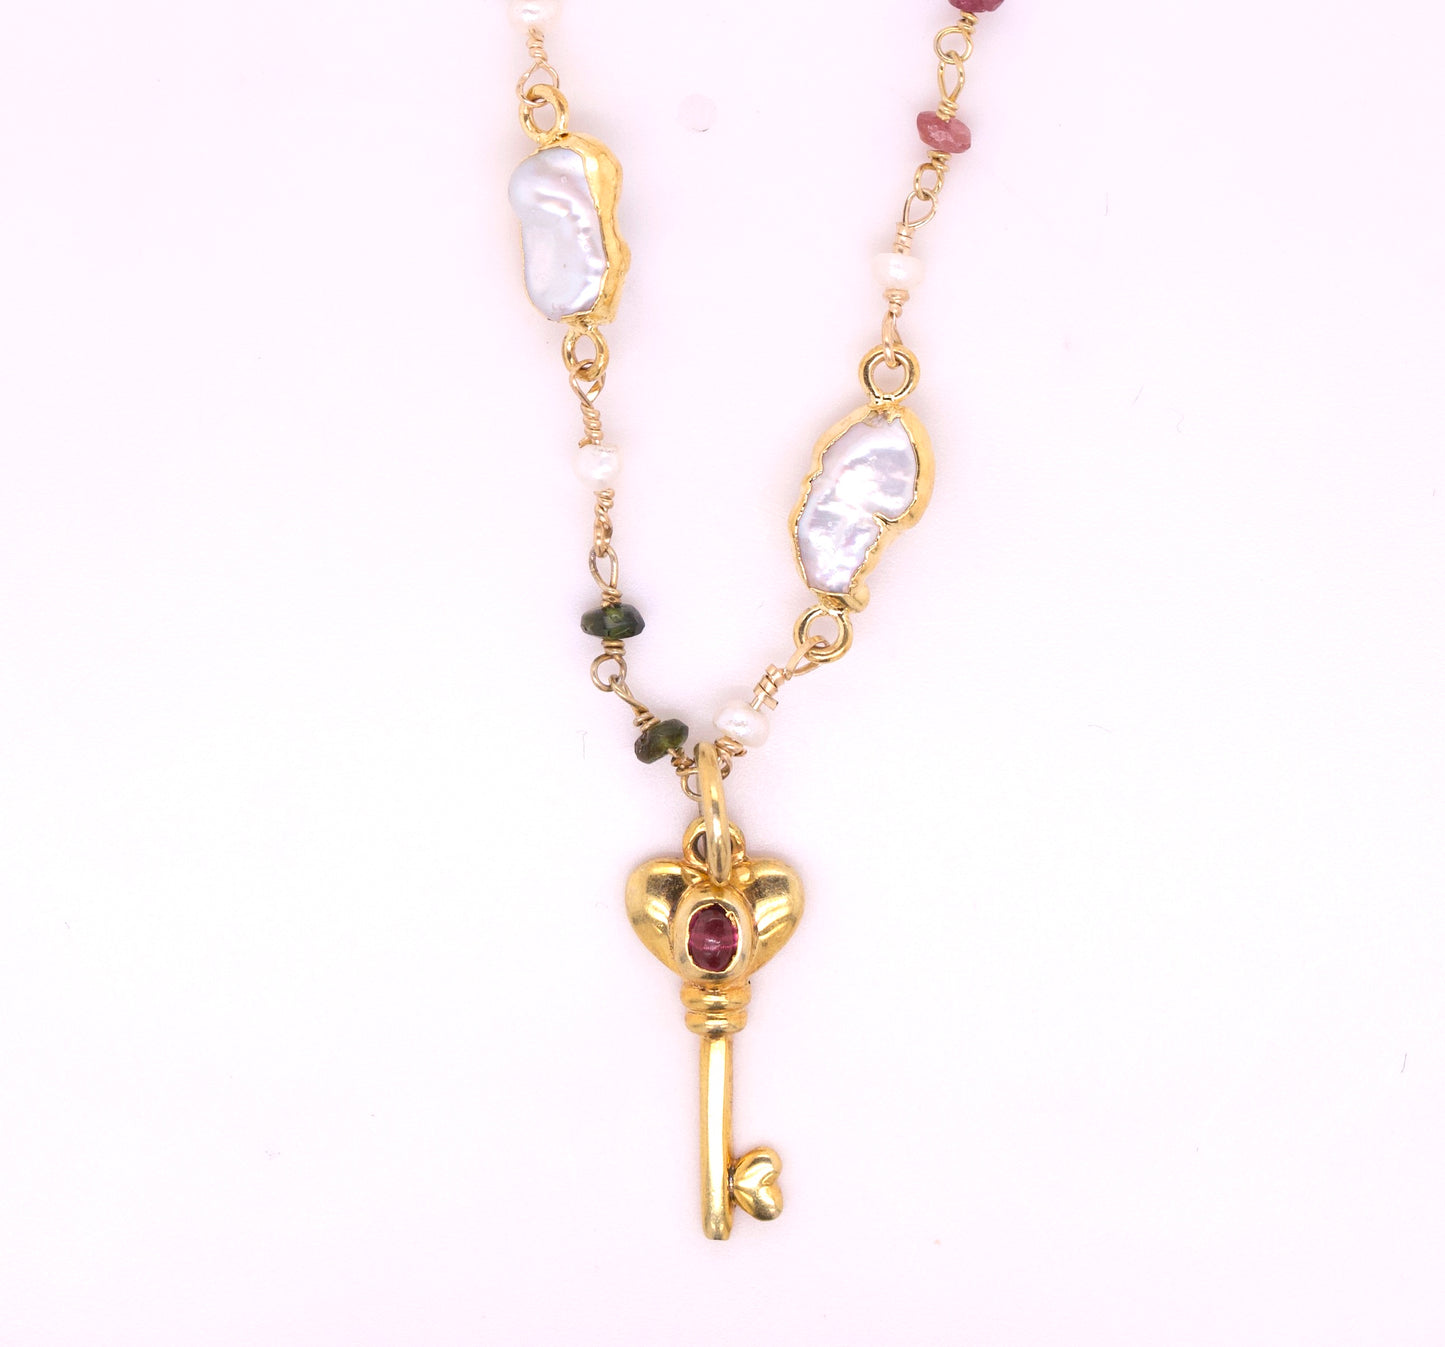 Treasured Key Necklace